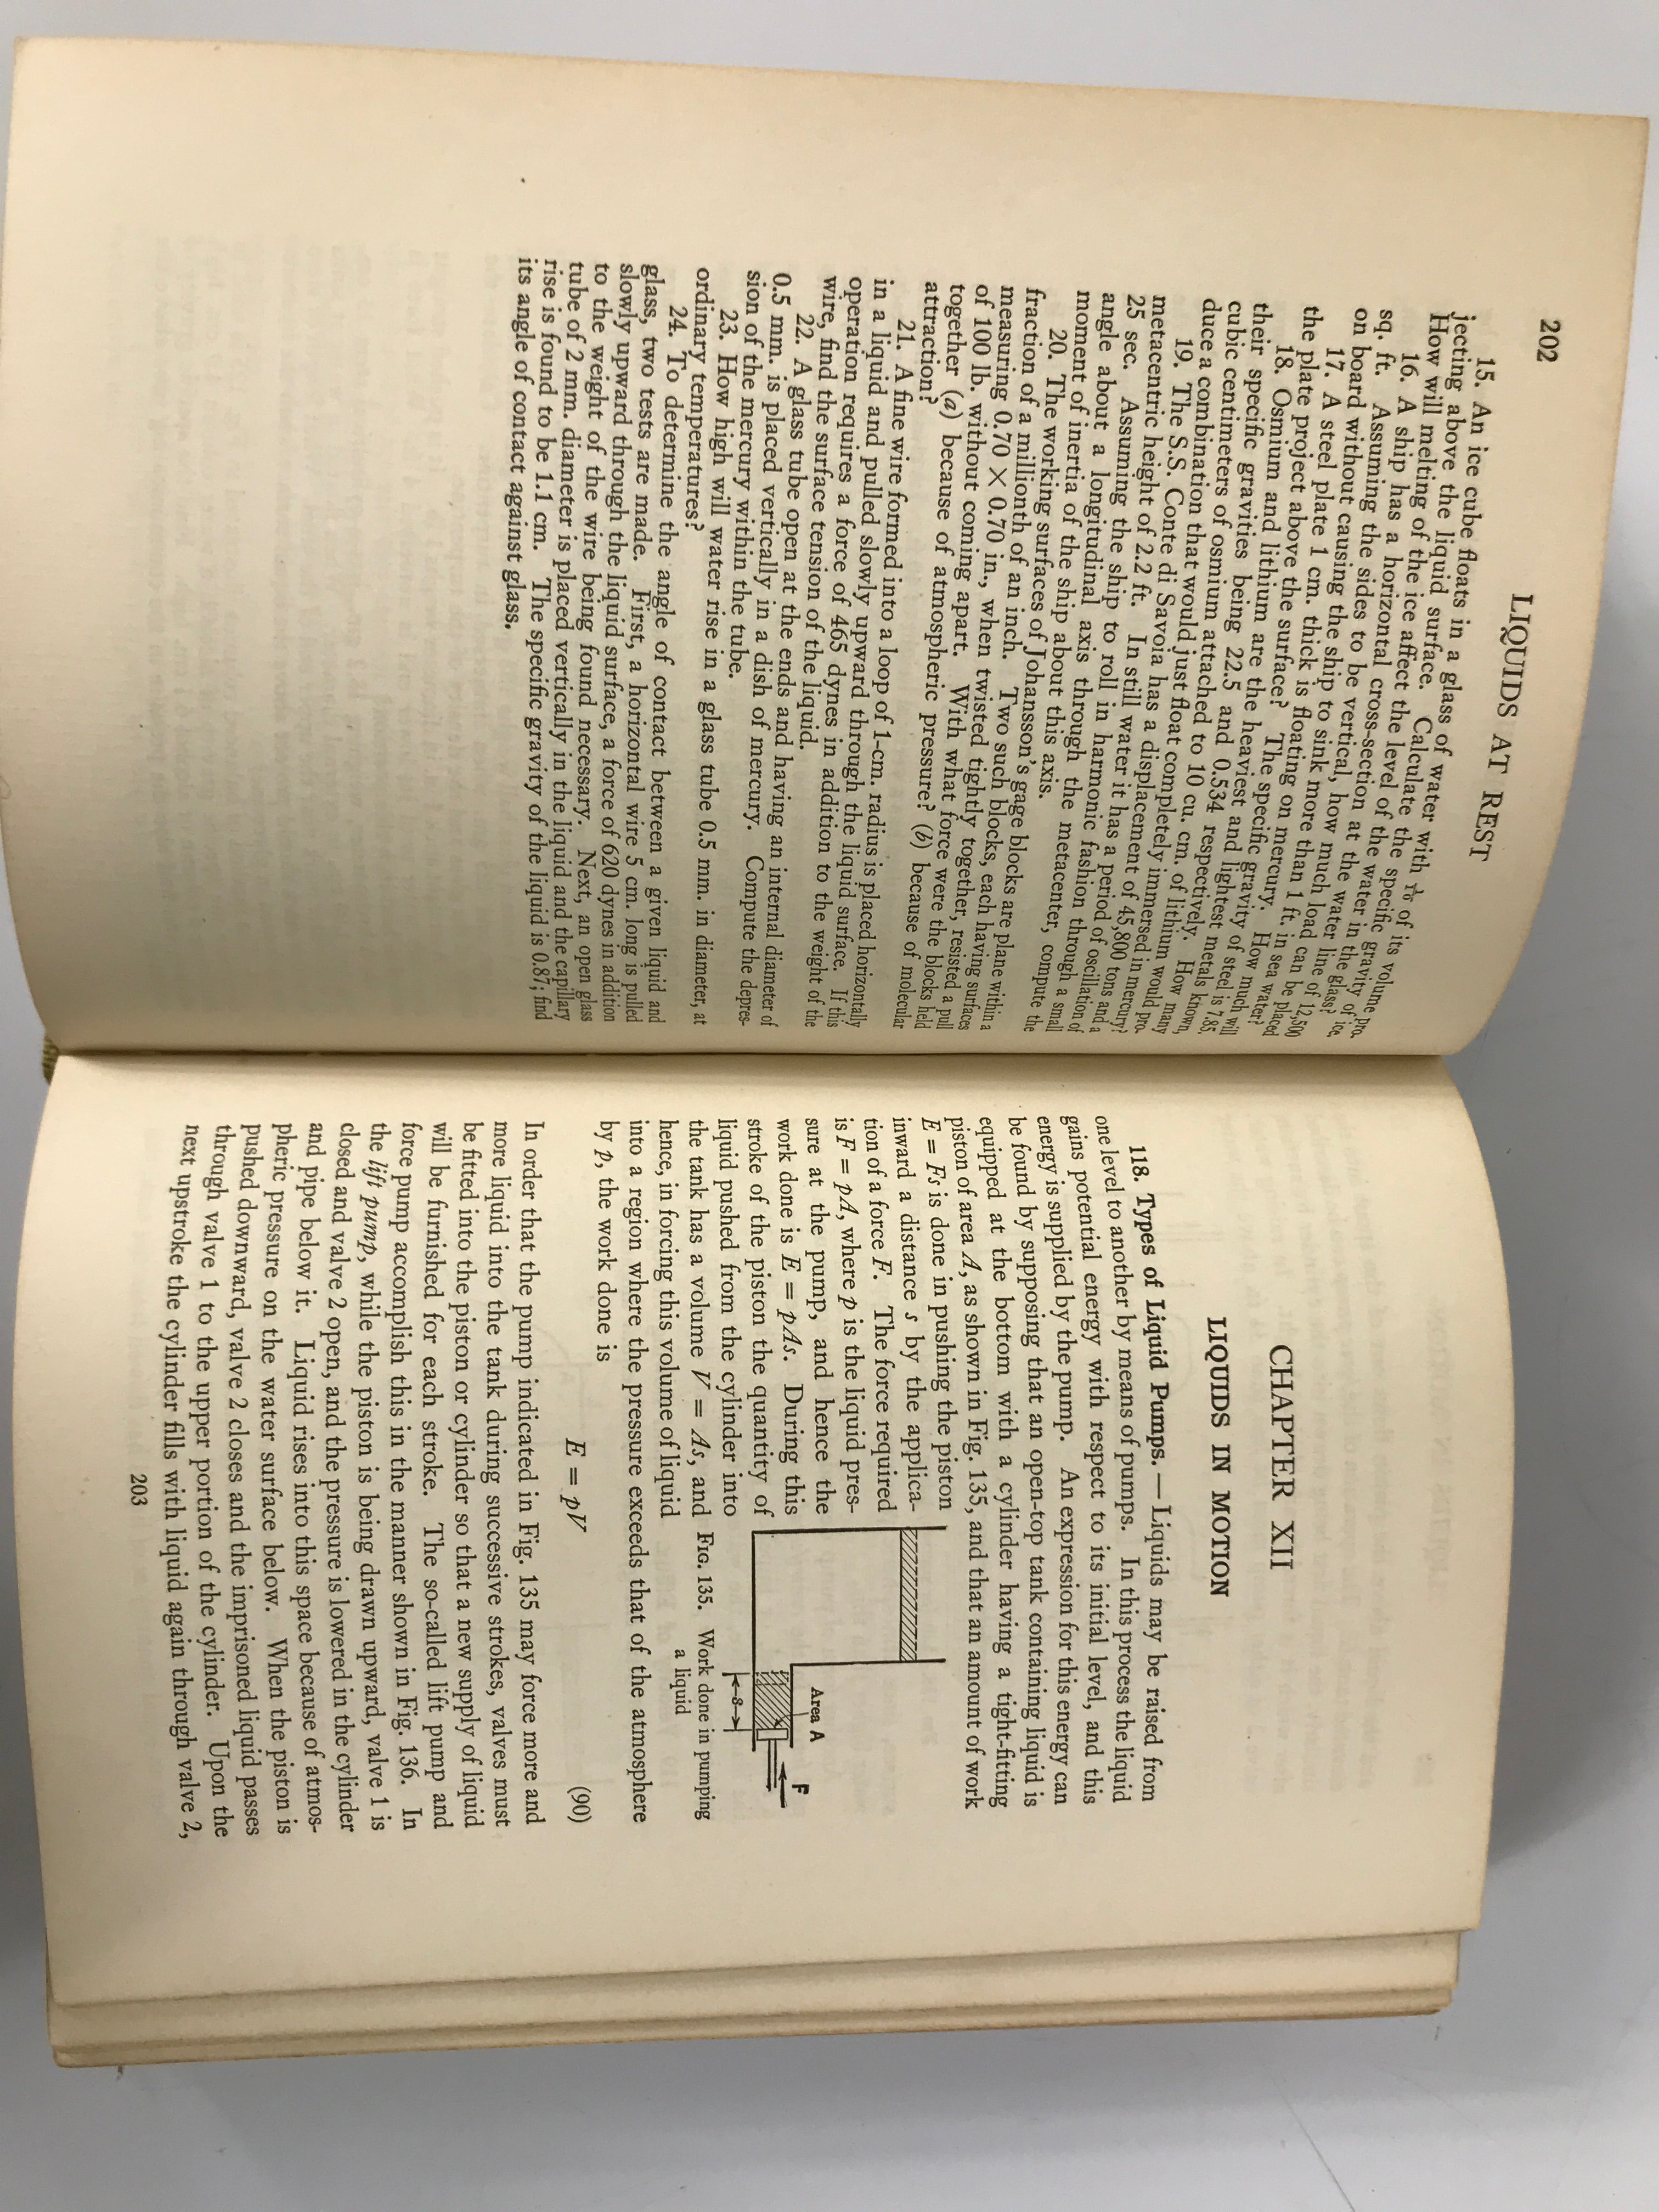 Physics by Hausmann and Slack 1946 HC